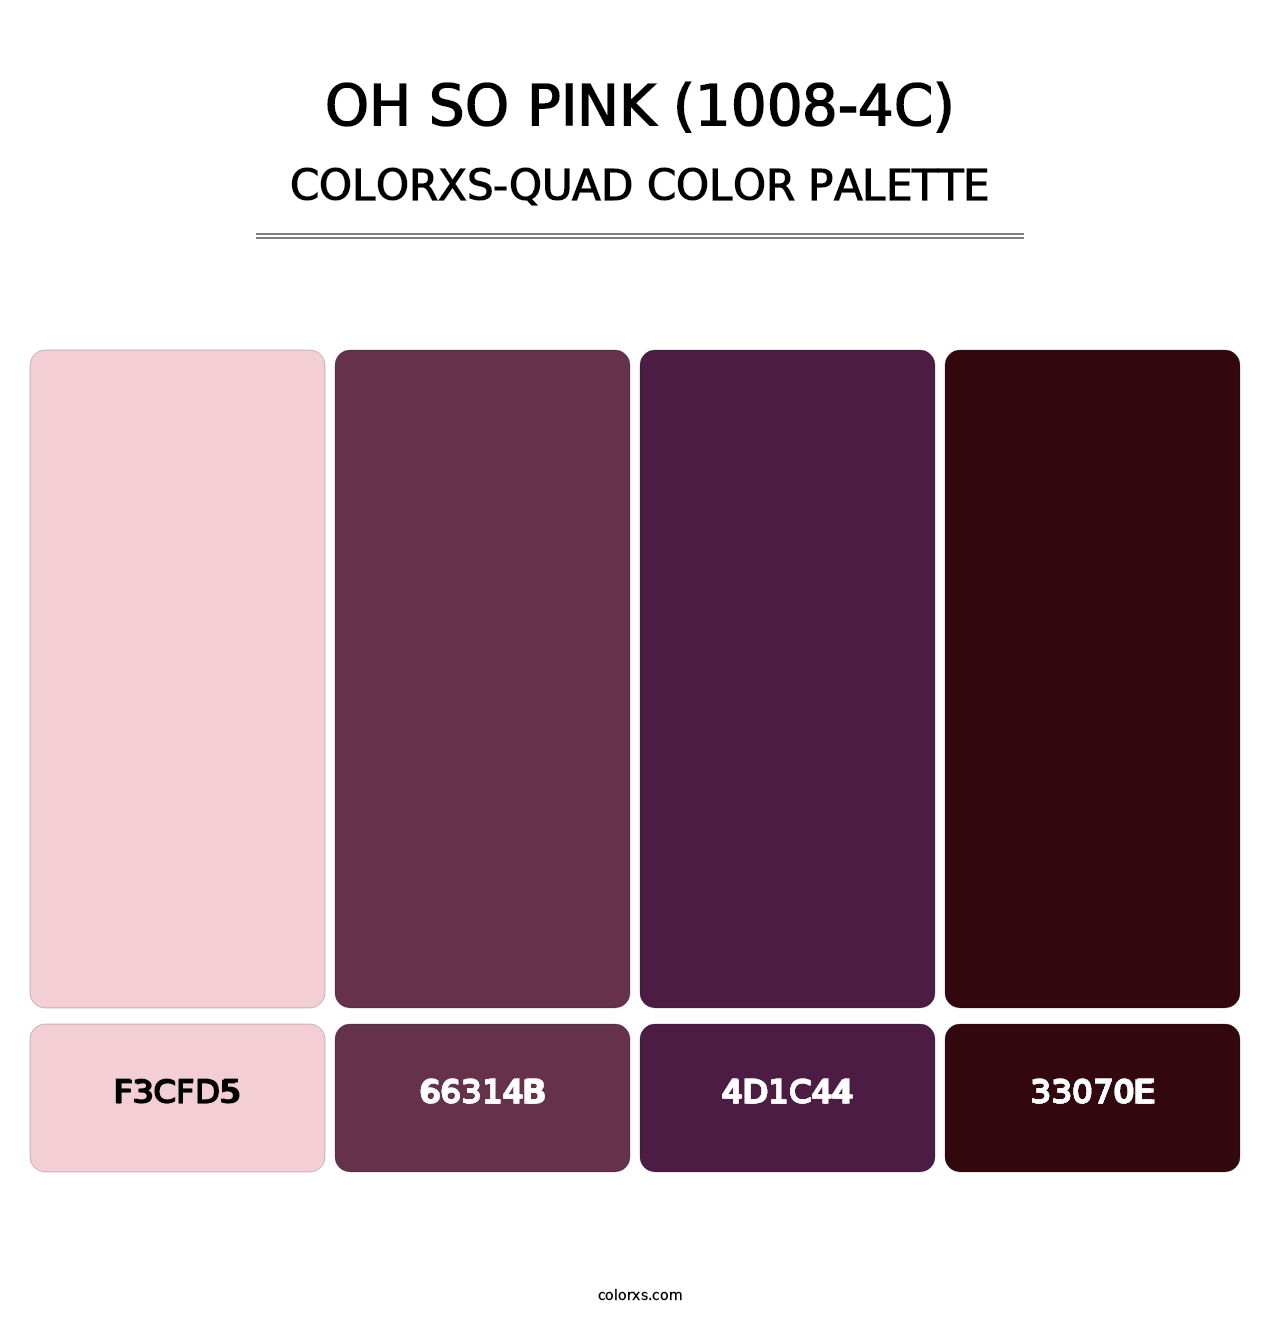 Oh So Pink (1008-4C) - Colorxs Quad Palette